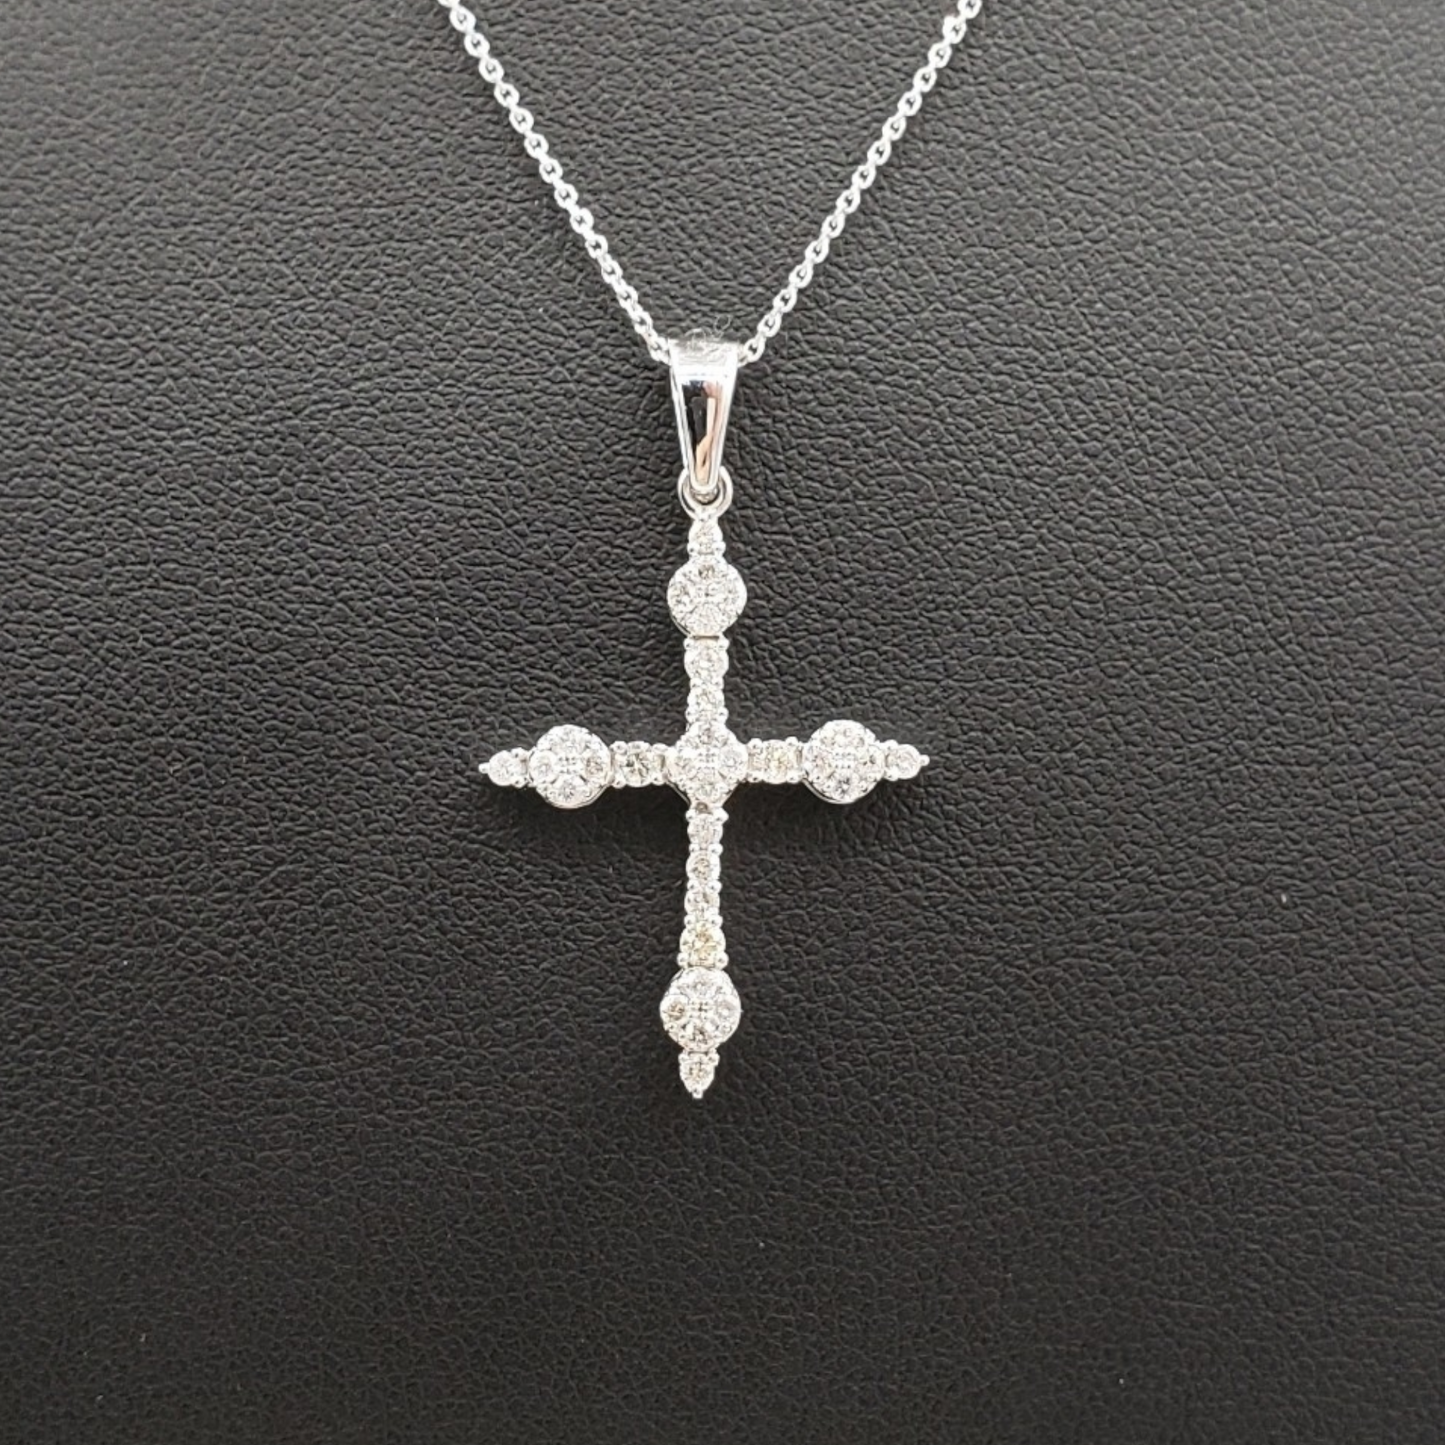 14k Diamond Cross With .53 Carats Of Diamonds and Rollo chain #27989